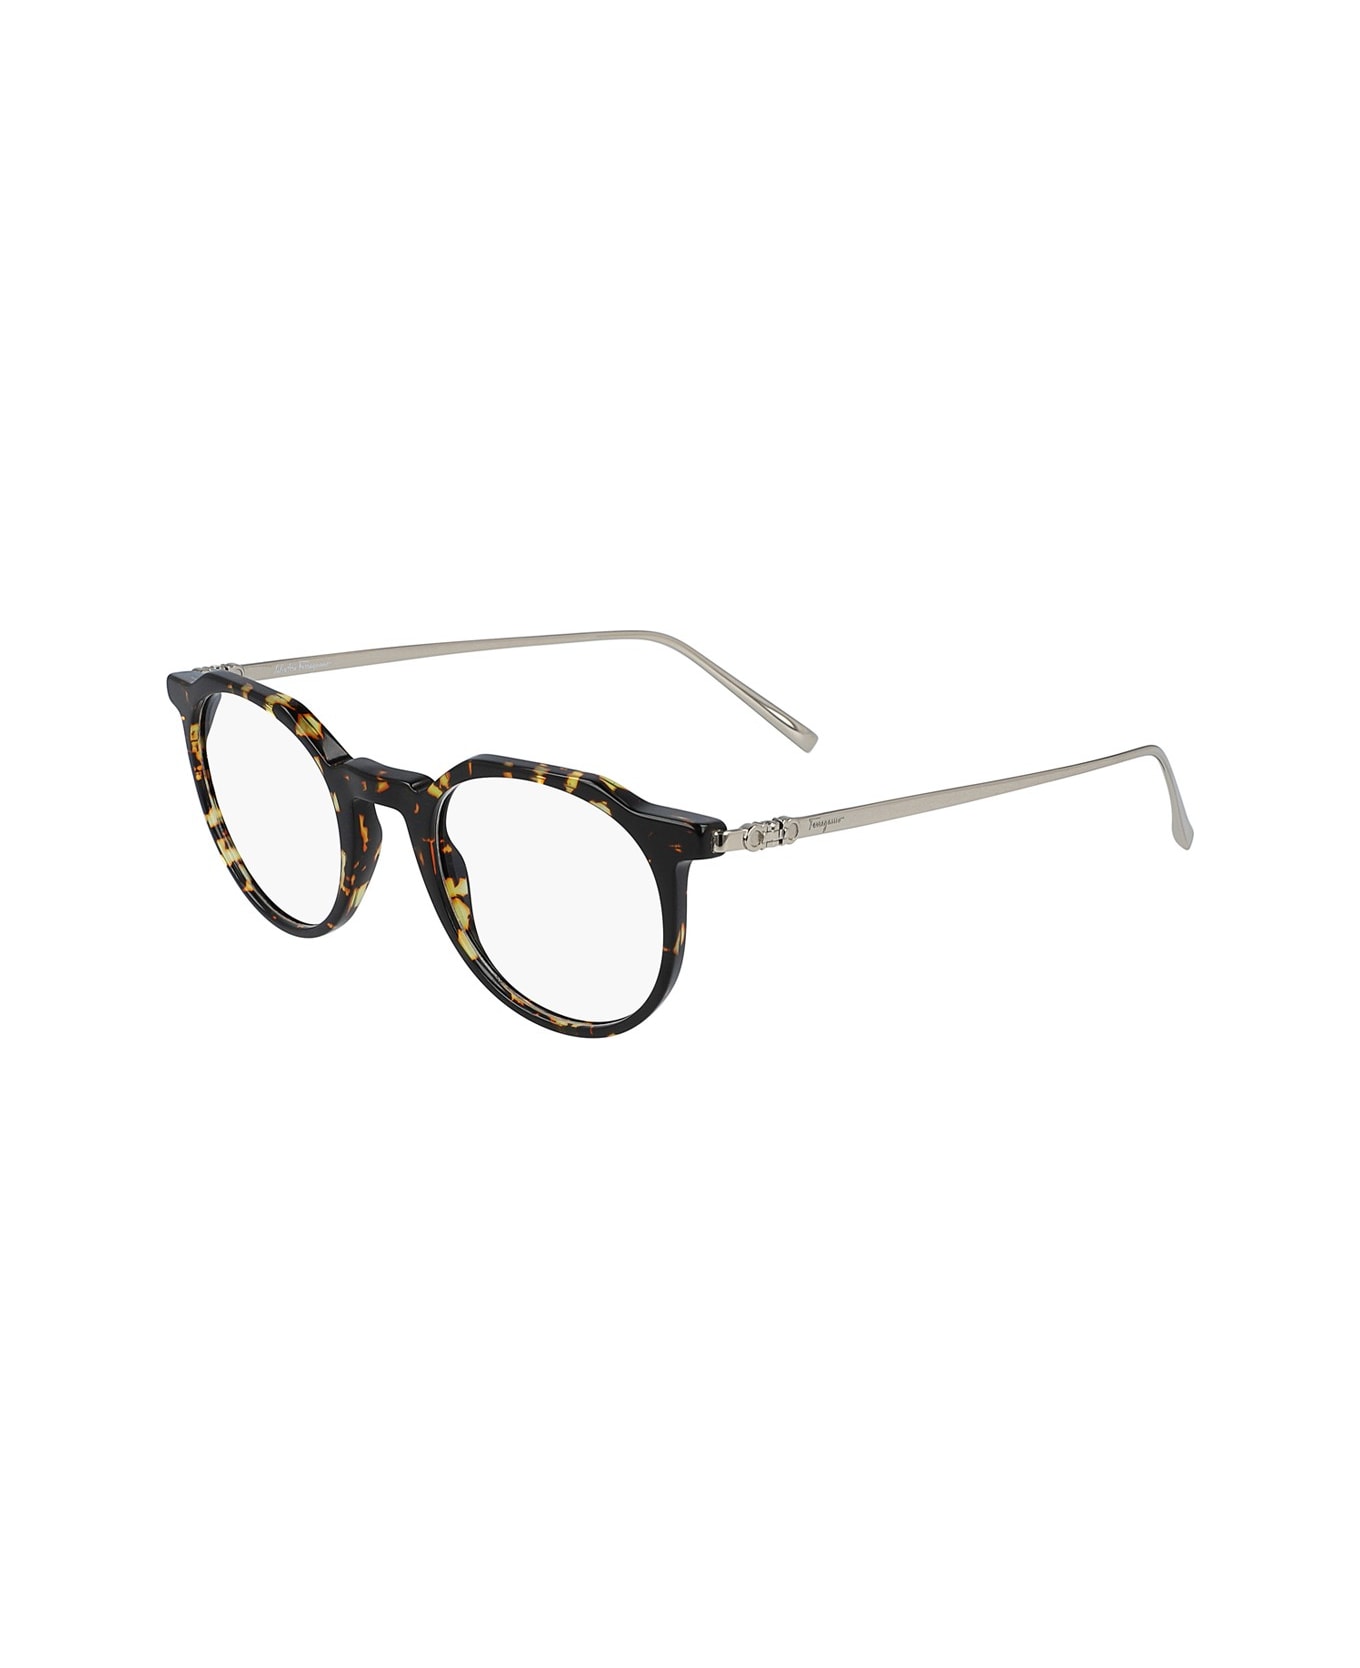 Salvatore Ferragamo Eyewear Sf2845 Glasses - Marrone アイウェア